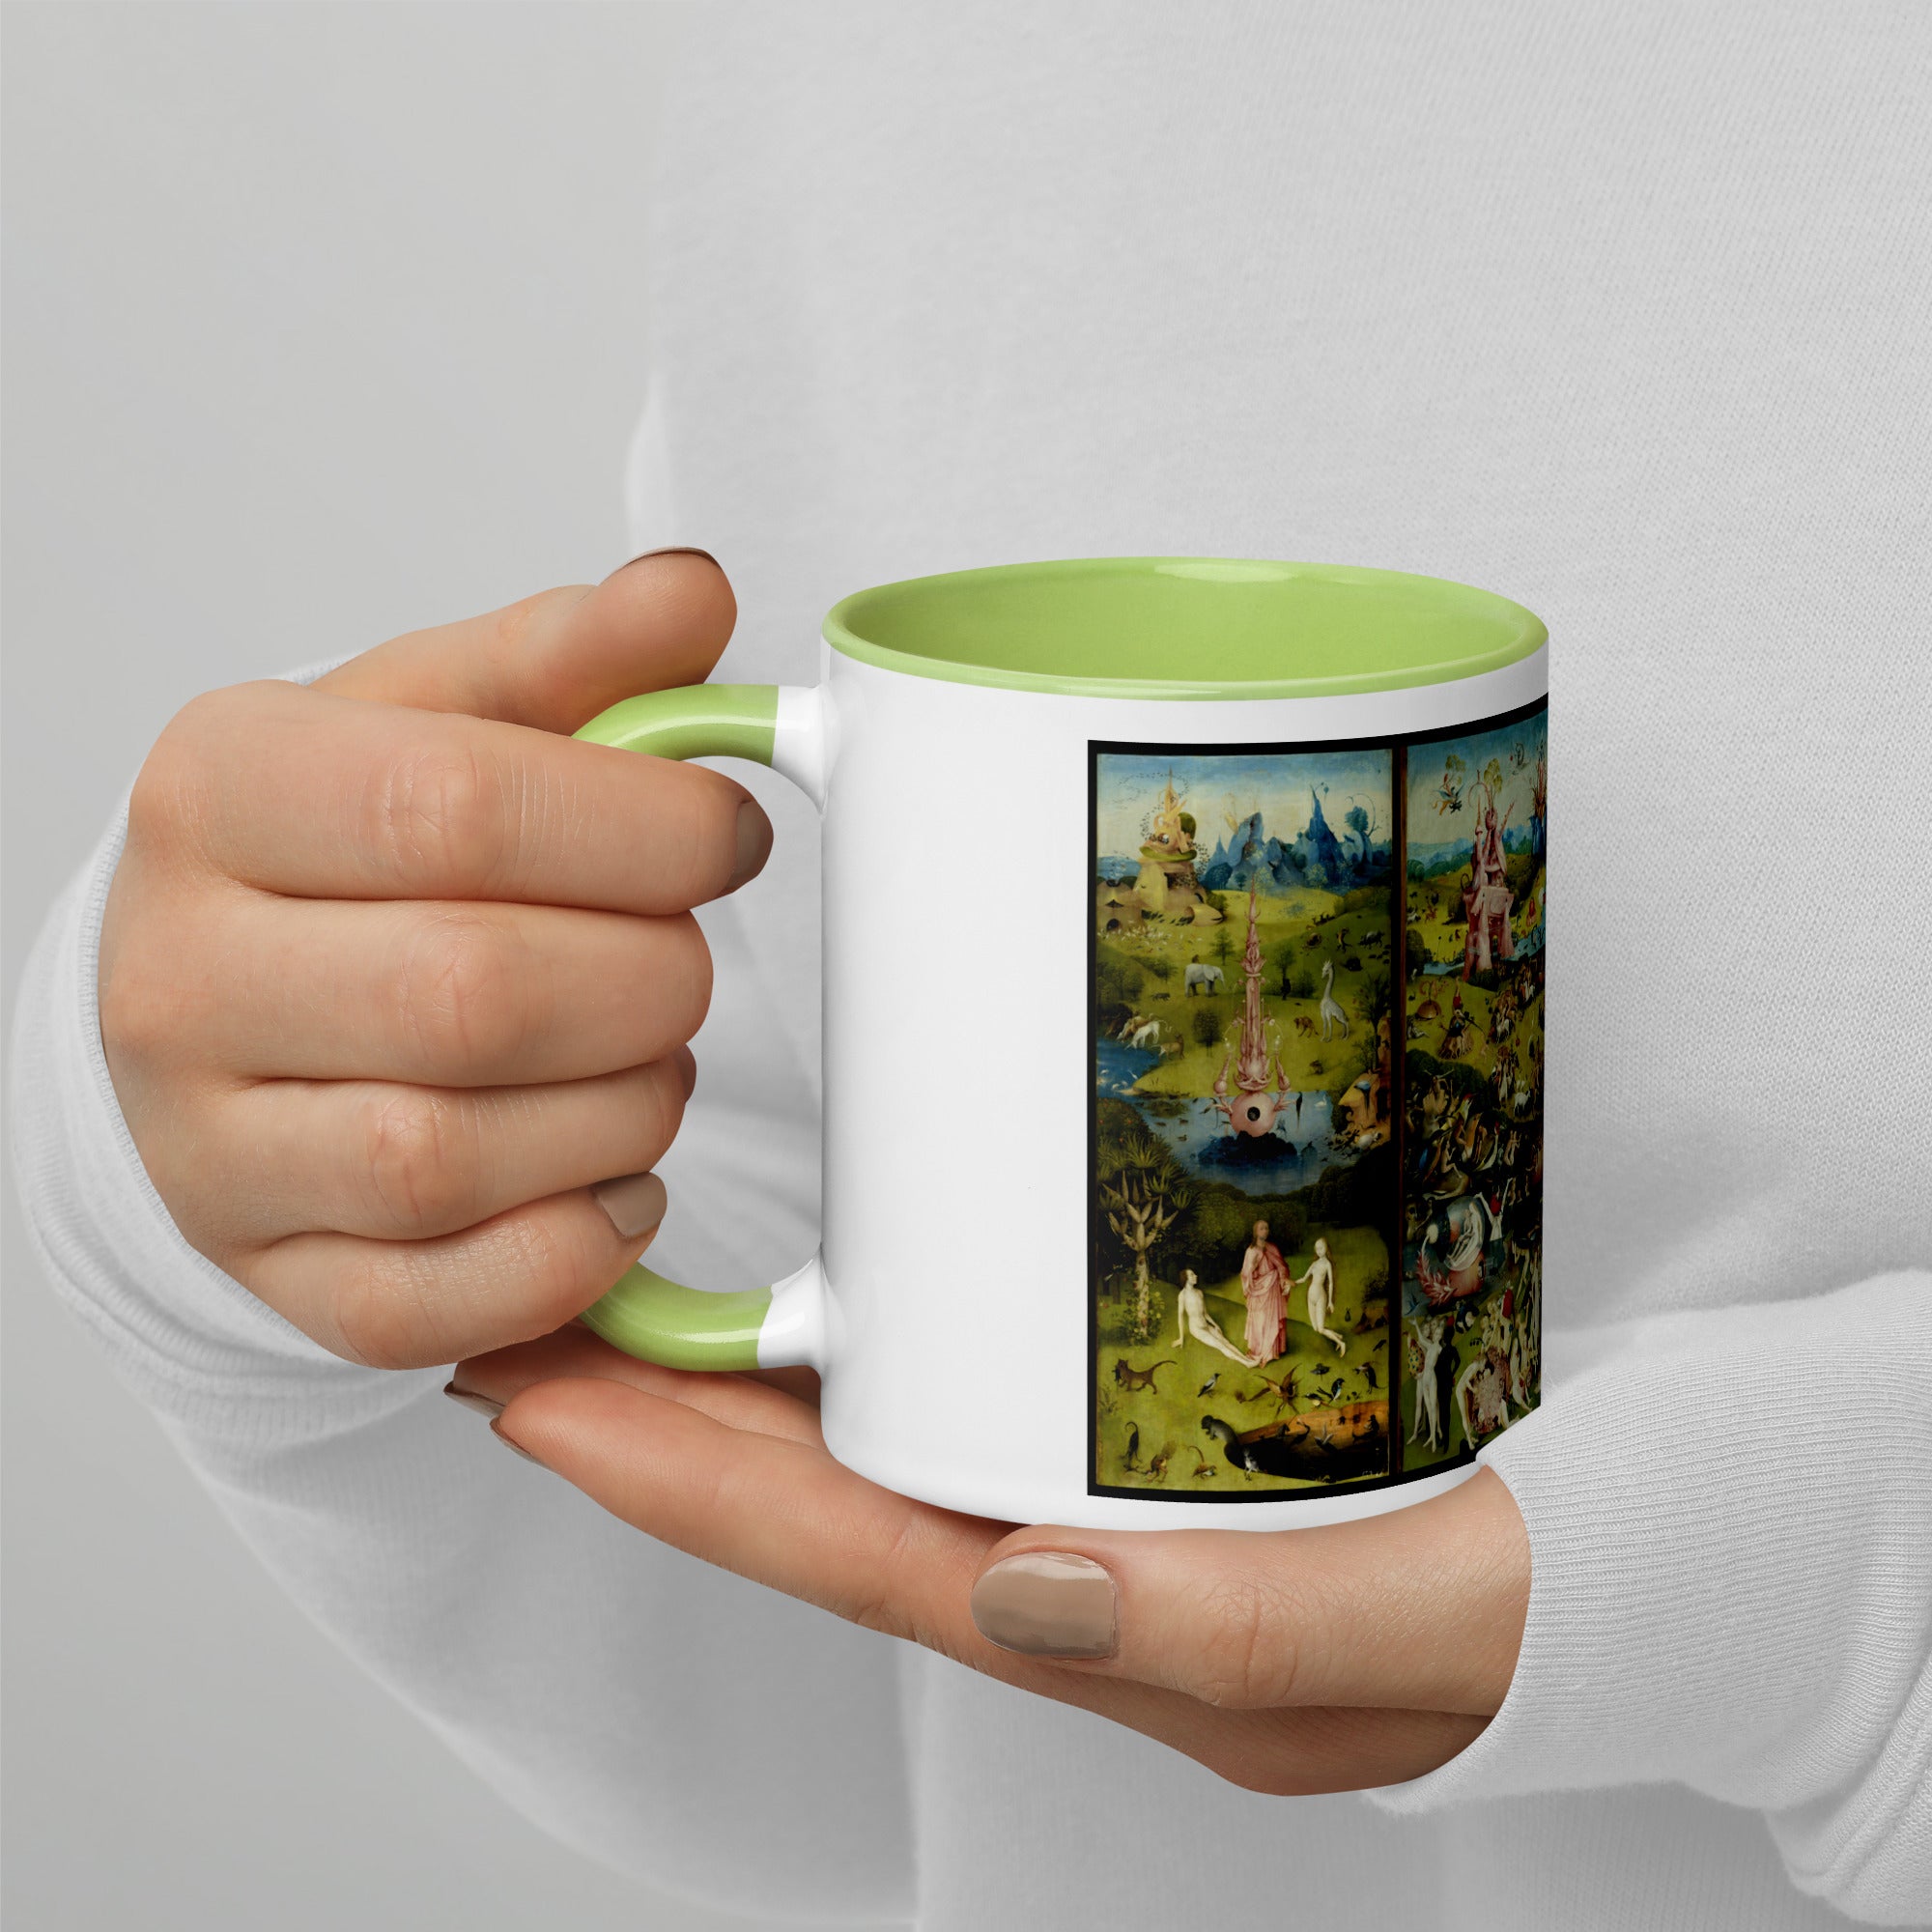 Hieronymus Bosch 'The Garden of Earthly Delights' Famous Painting Ceramic Mug | Premium Art Mug